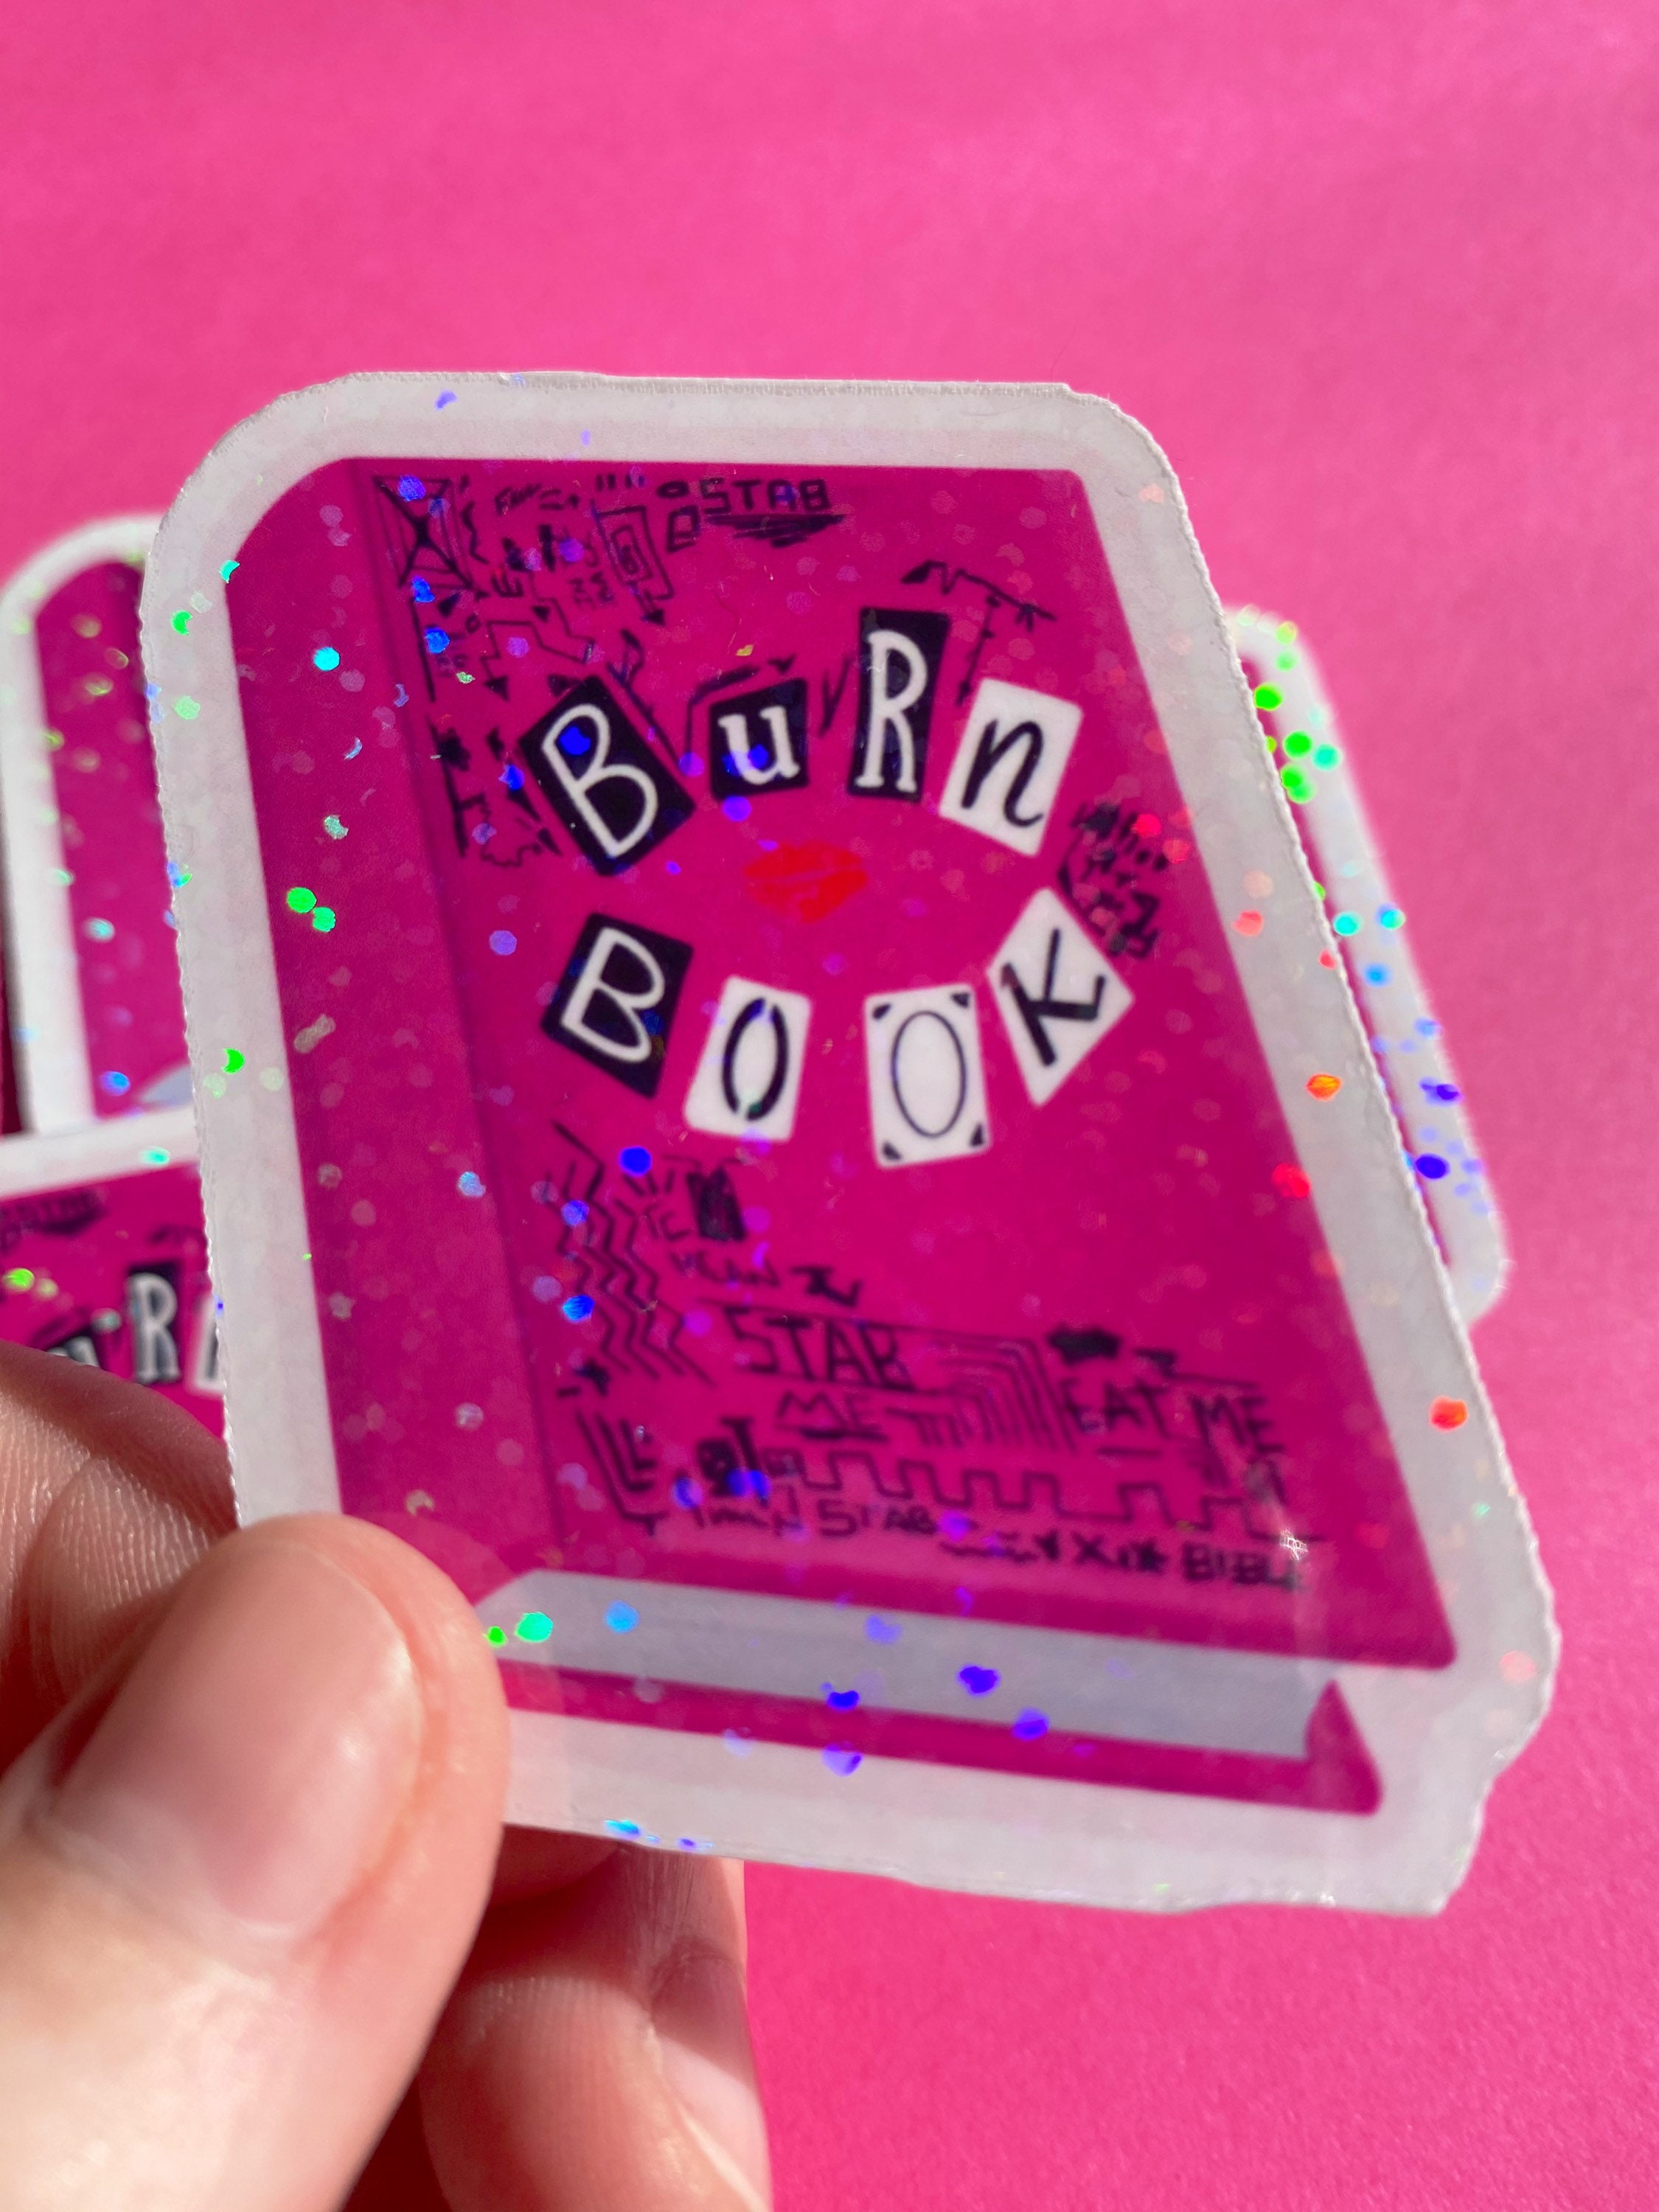 Holographic Mean Girls Sticker / Burn Book Sticker / Mean Girls / Burn Book  / Holographic Sticker / Holographic Burn Book Sticker 